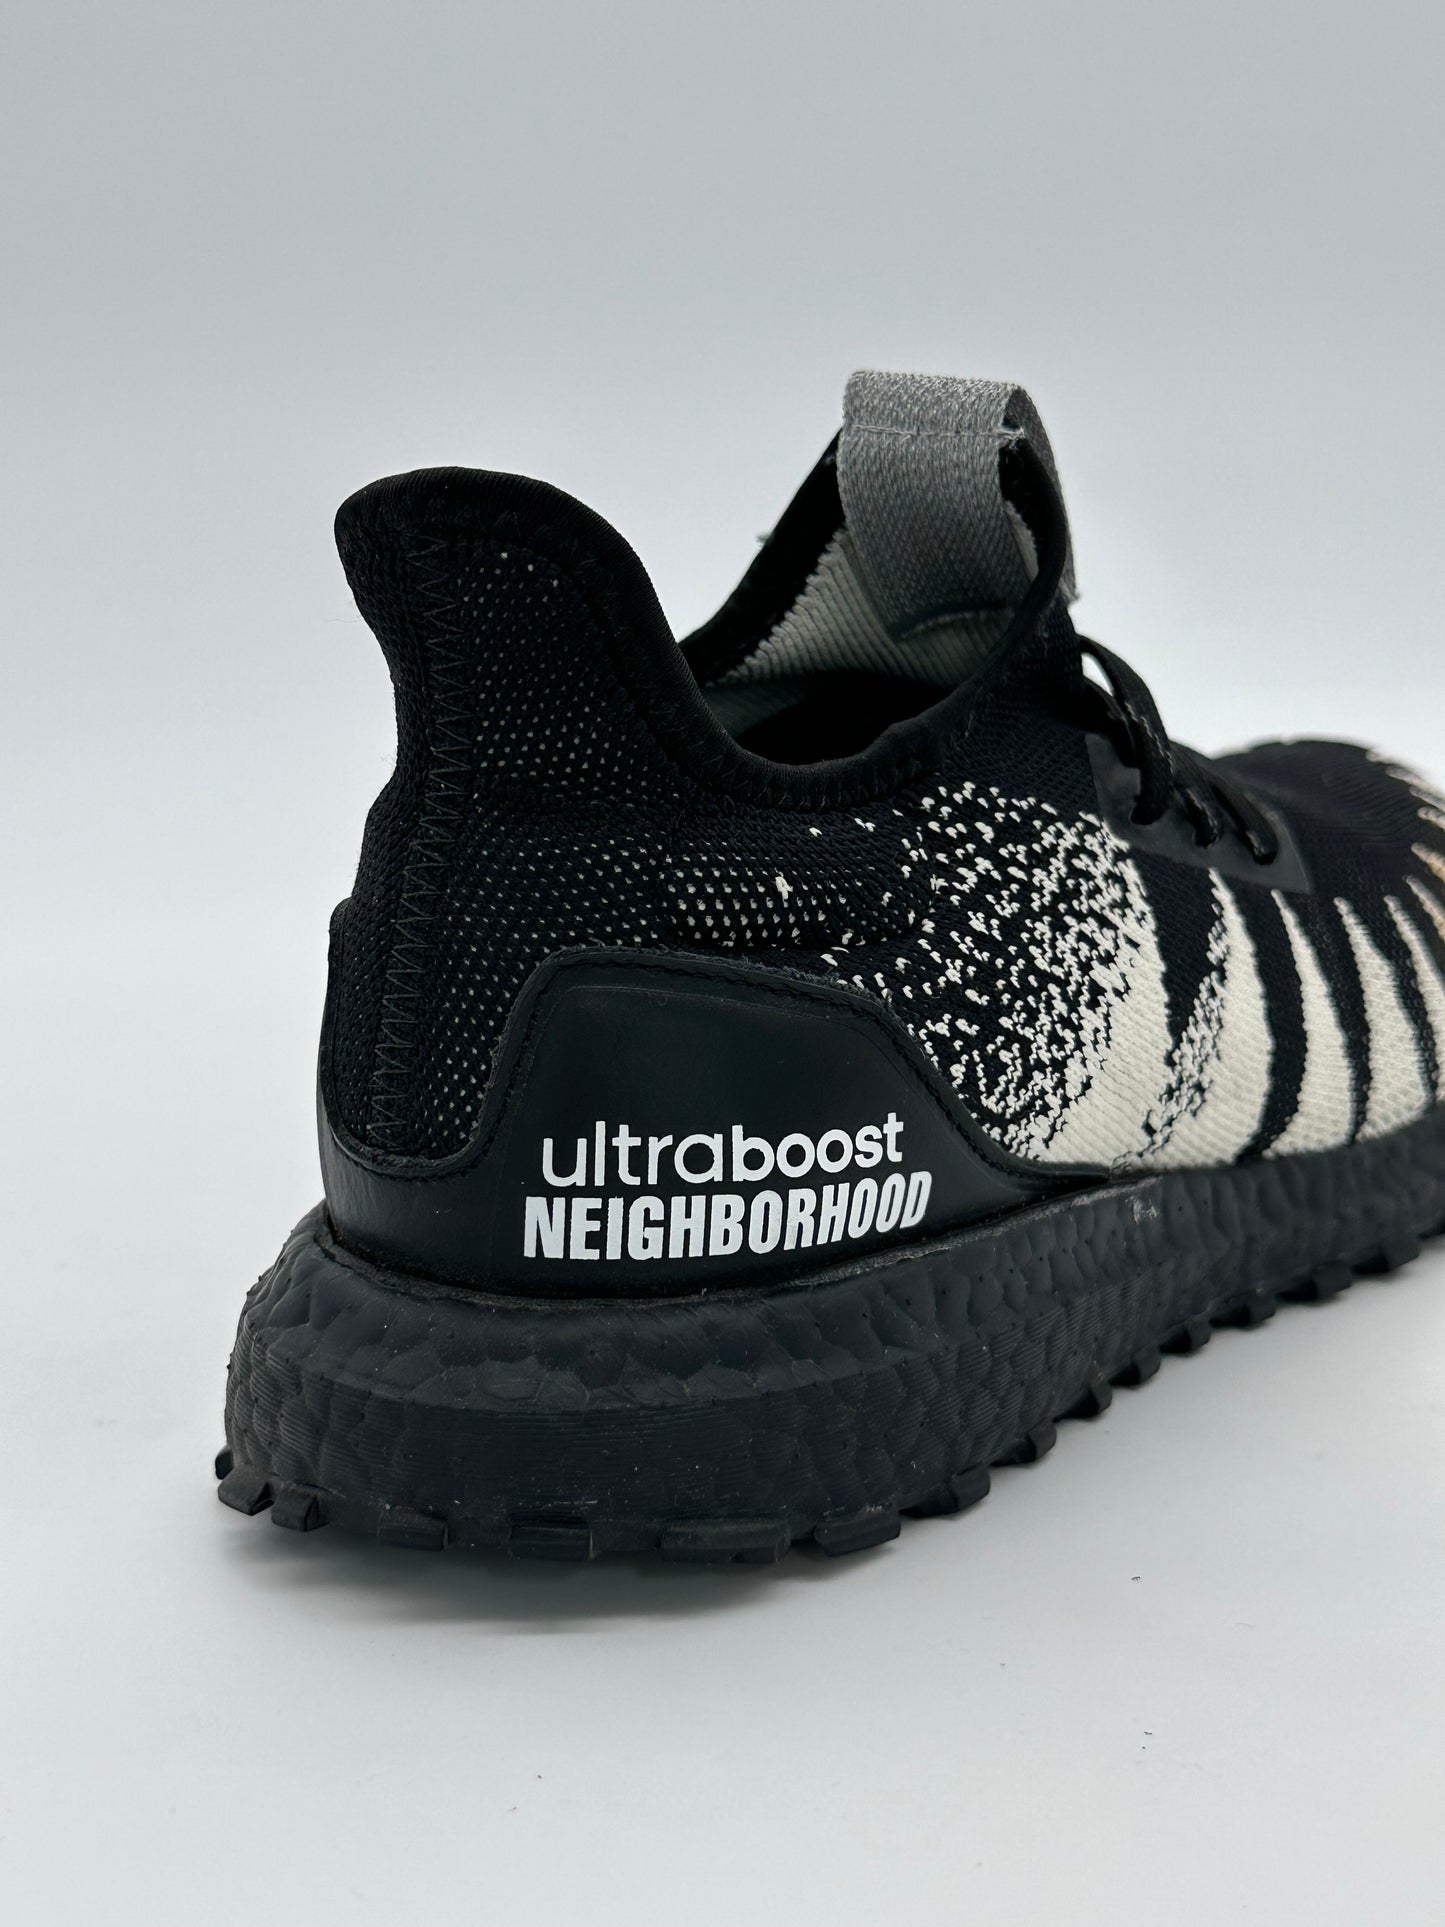 Ultraboost Neighborhood Sneakers